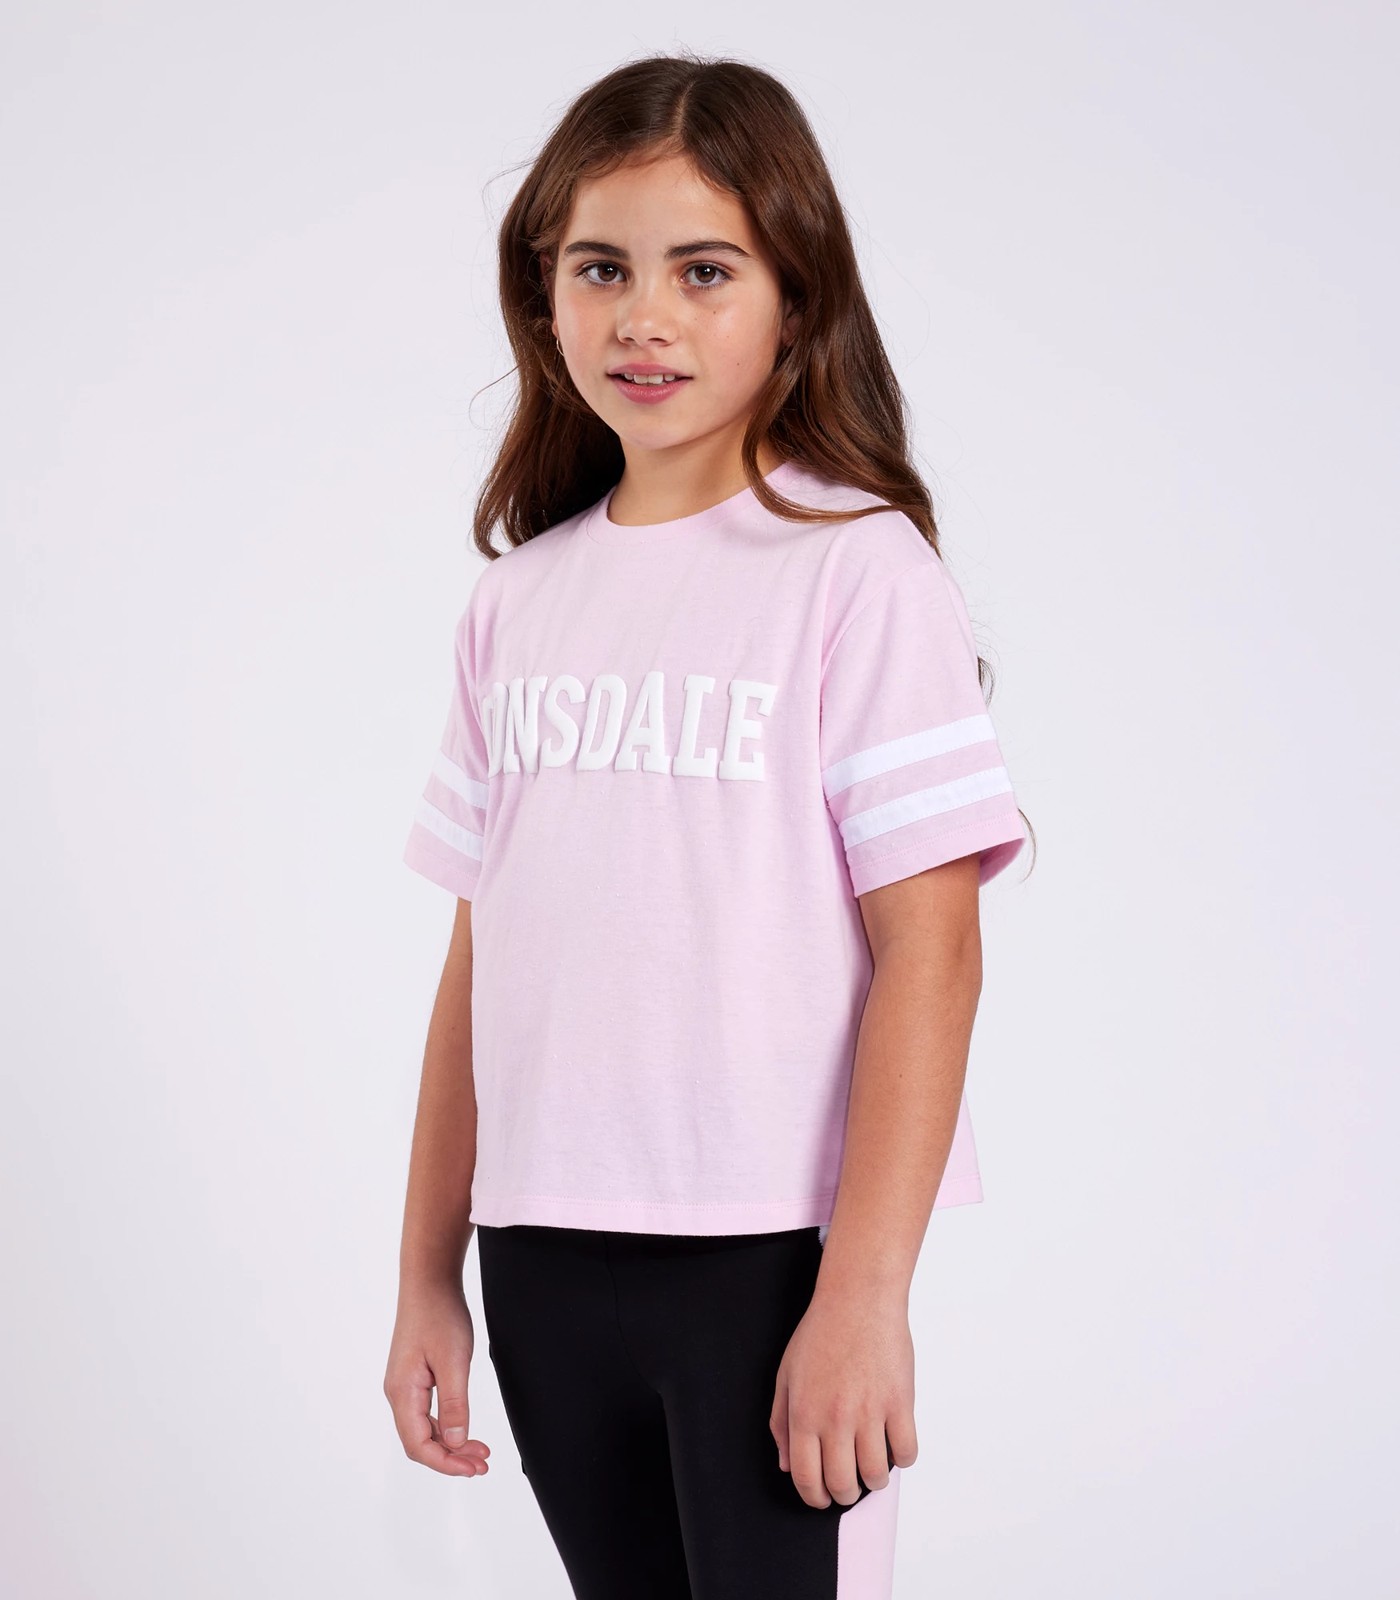 Lonsdale London Marjorie Boxy T-shirt | Target Australia